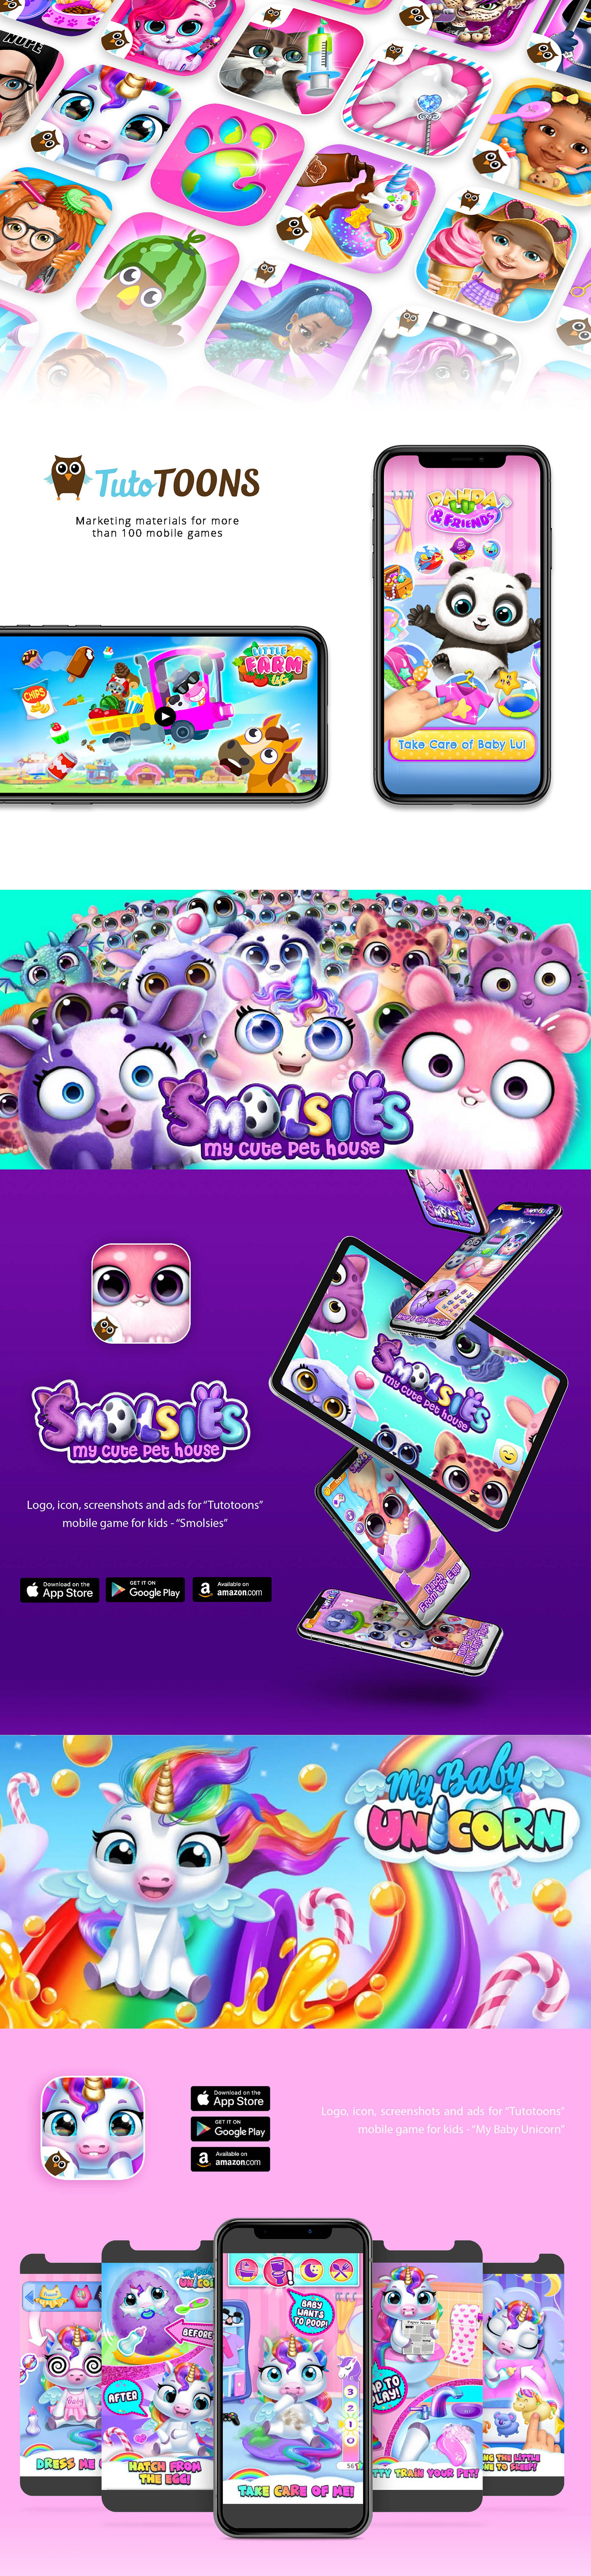 #Logo #icon #mobilegames #kidsgames #app #Branding #Advertising #ads #kids  